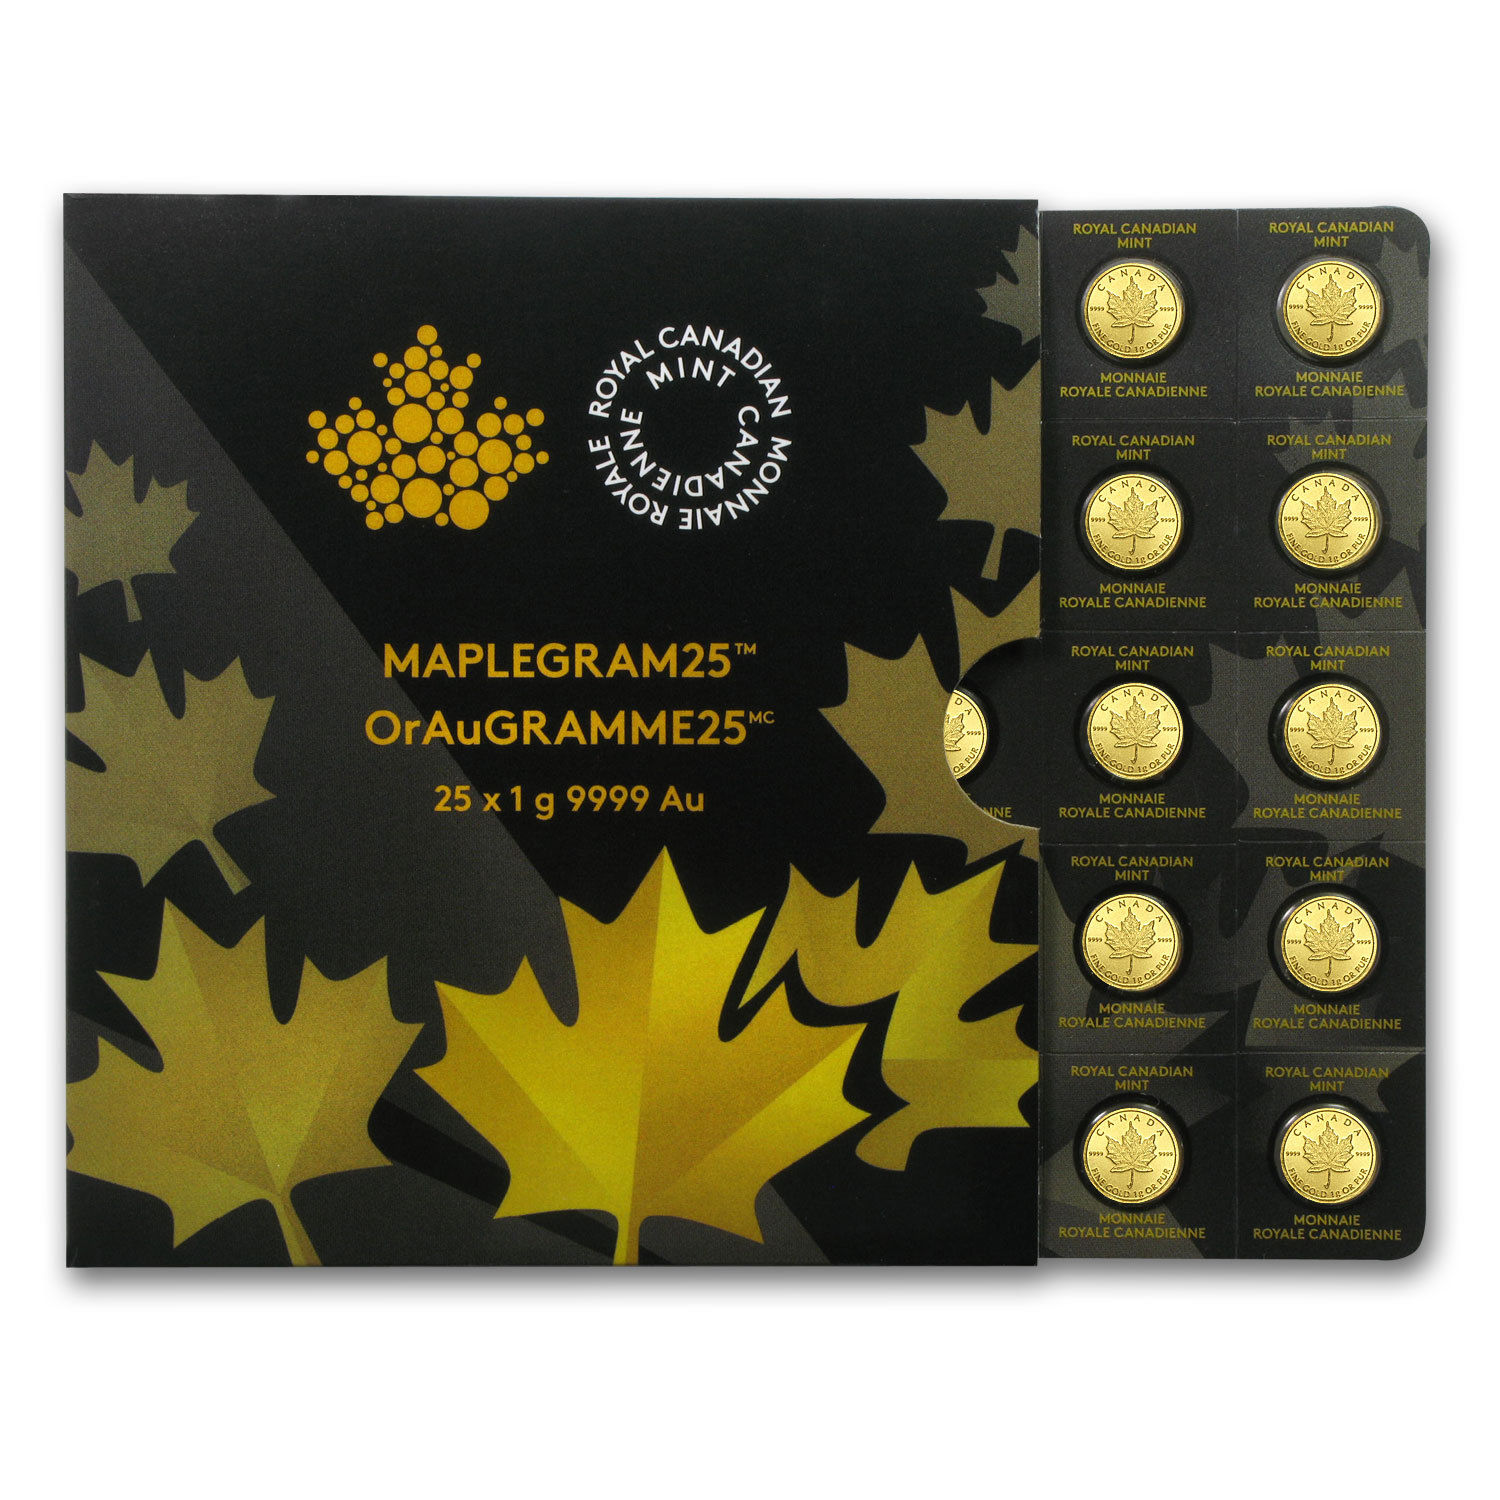 2015 25x 1 gram Gold Maple Leafs - Maplegram25™ (In Assay Sleeve) - SKU #86165